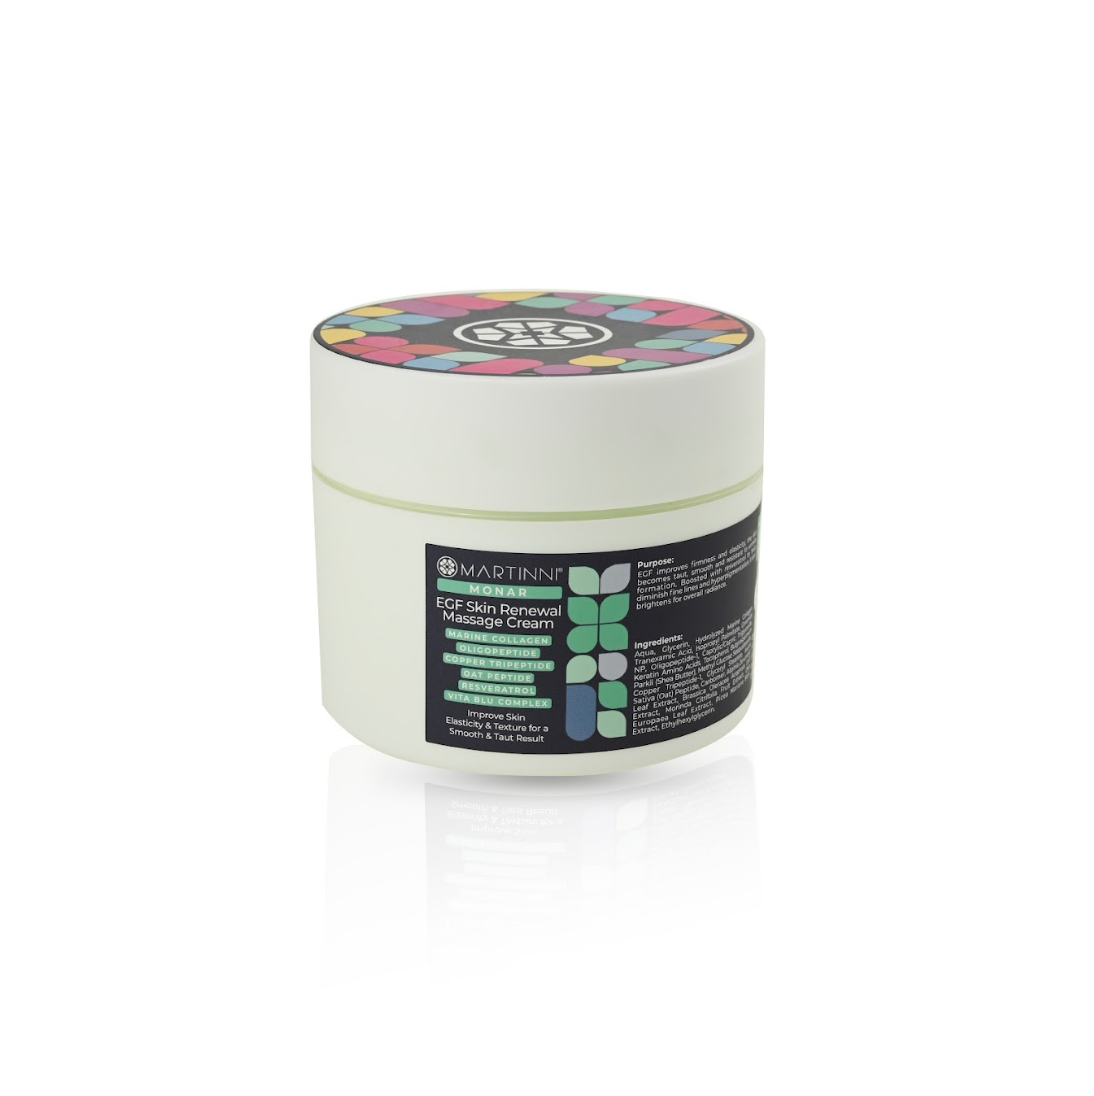 EGF Skin Renewal Massage Cream 8.8 oz. (250 g)